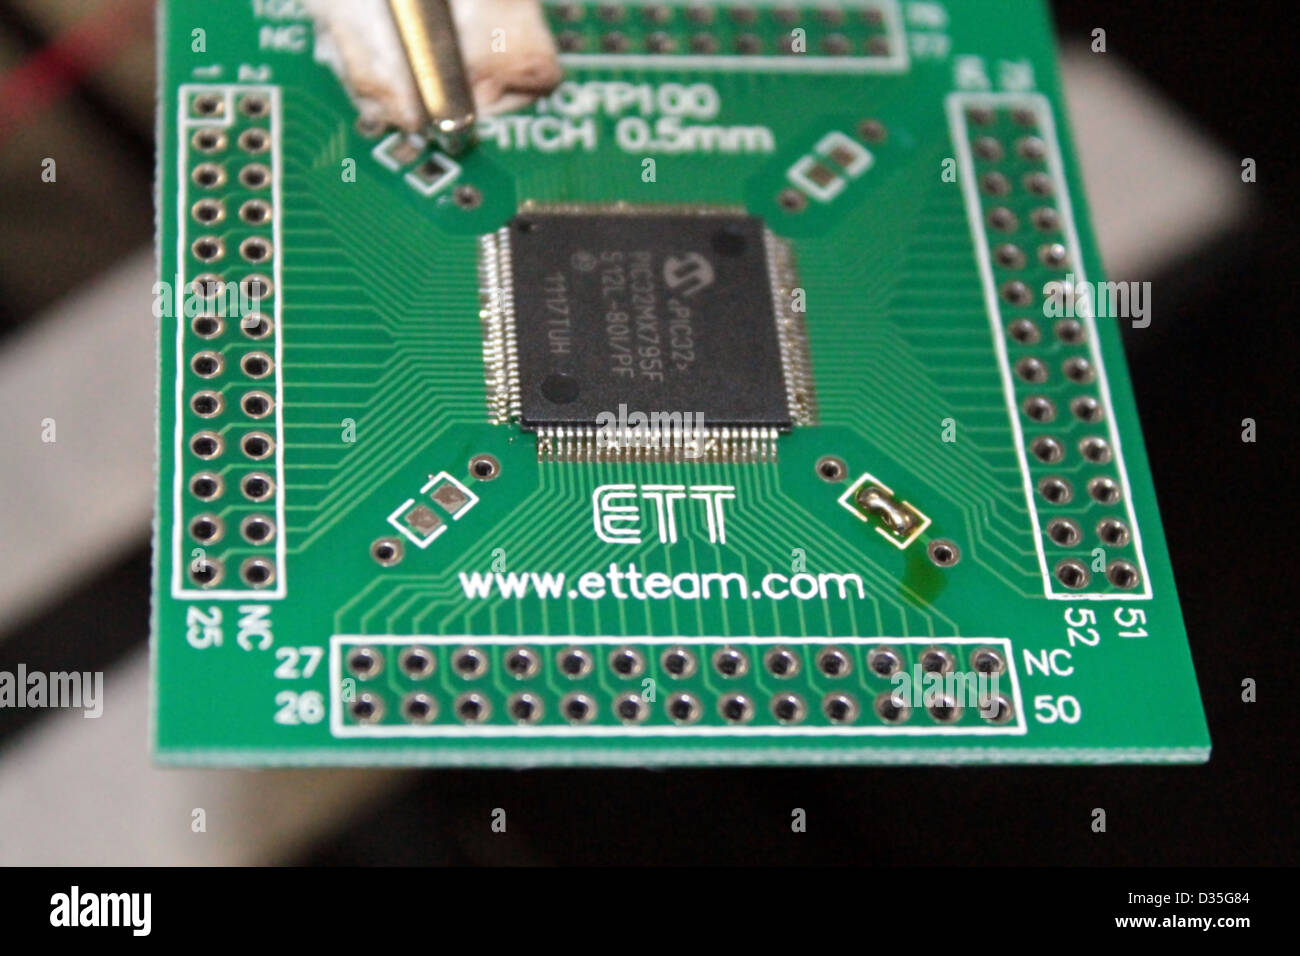 Microchip PIC32, TQFP socket 100pins adapter (Microchip PIC32, adattatore ad interfaccia TQFP 100 piedini) Stock Photo